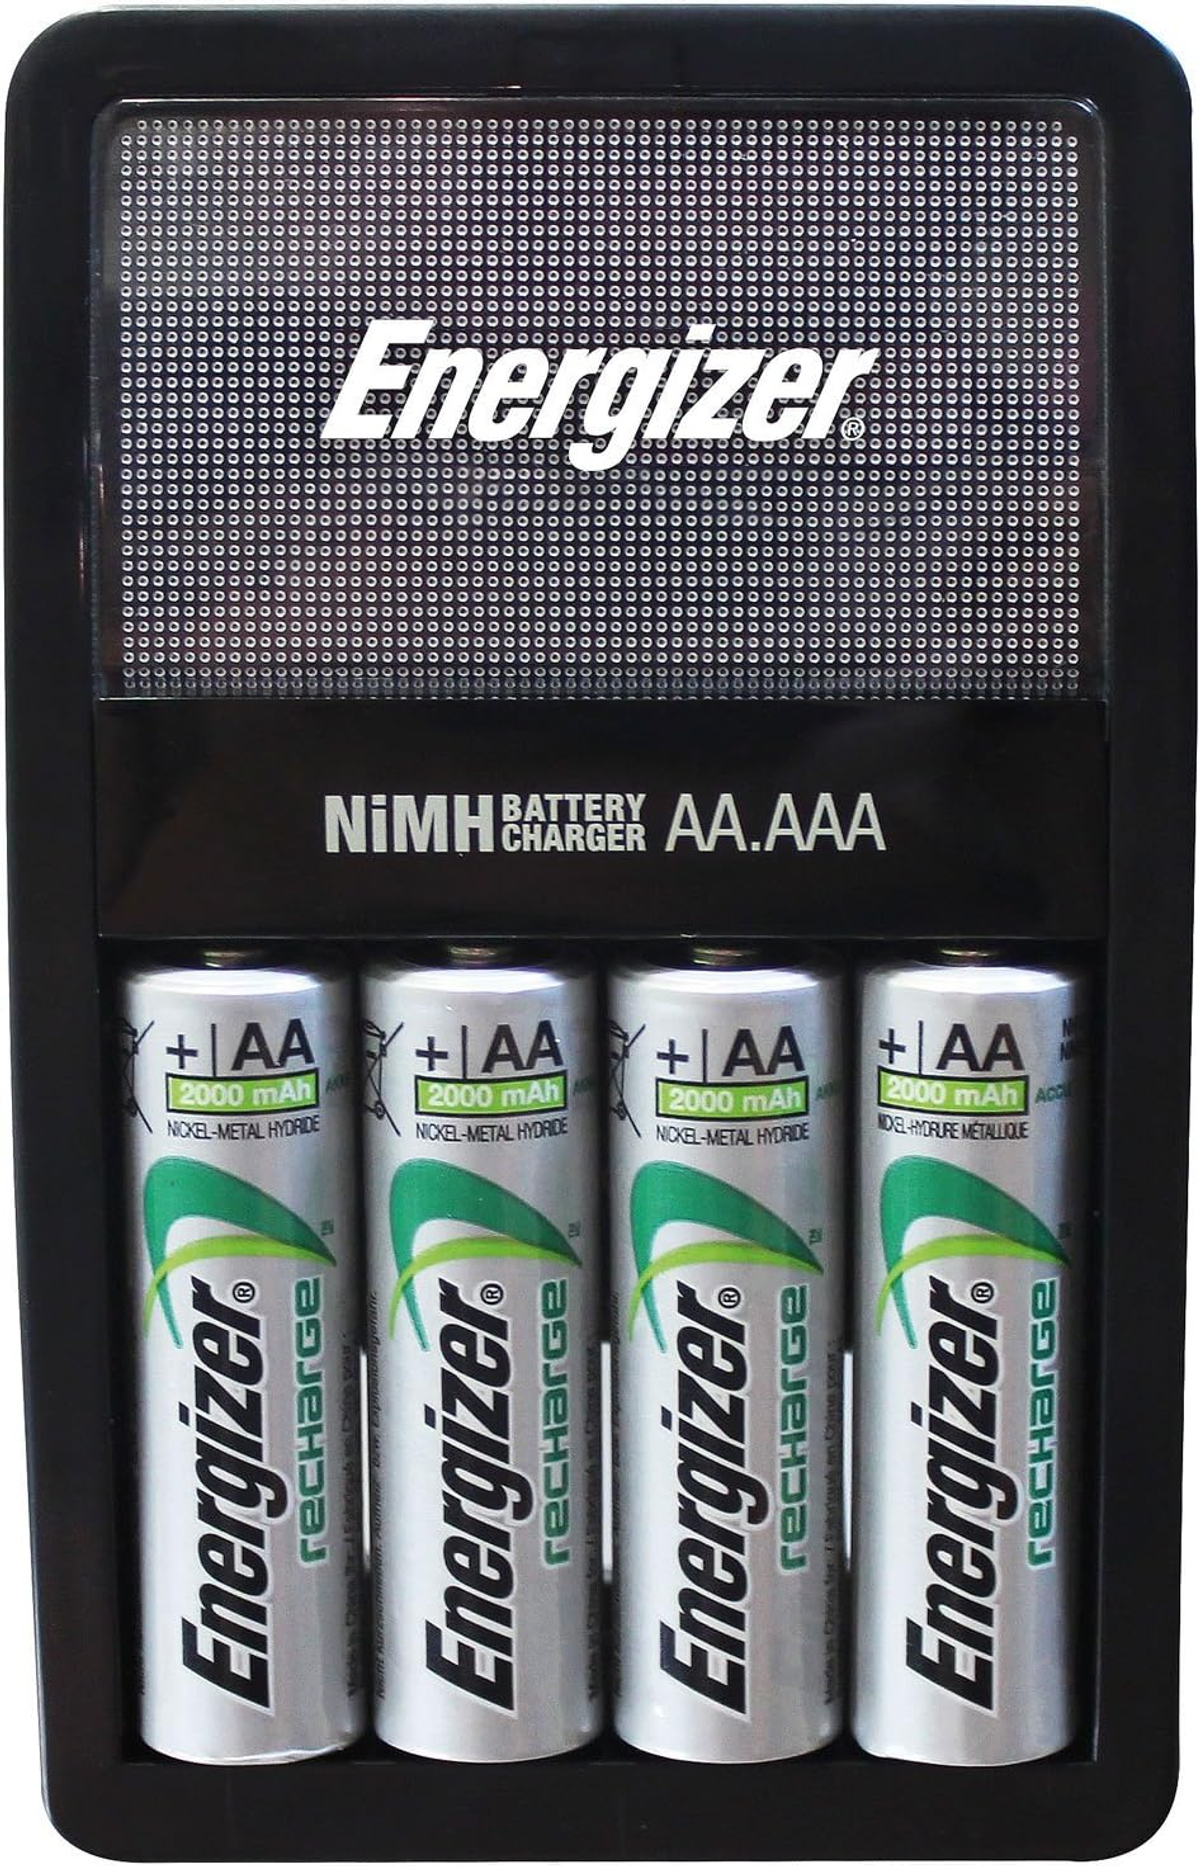 ENERGIZER 635043 Batteriladdare 2000 mAh Schwarz